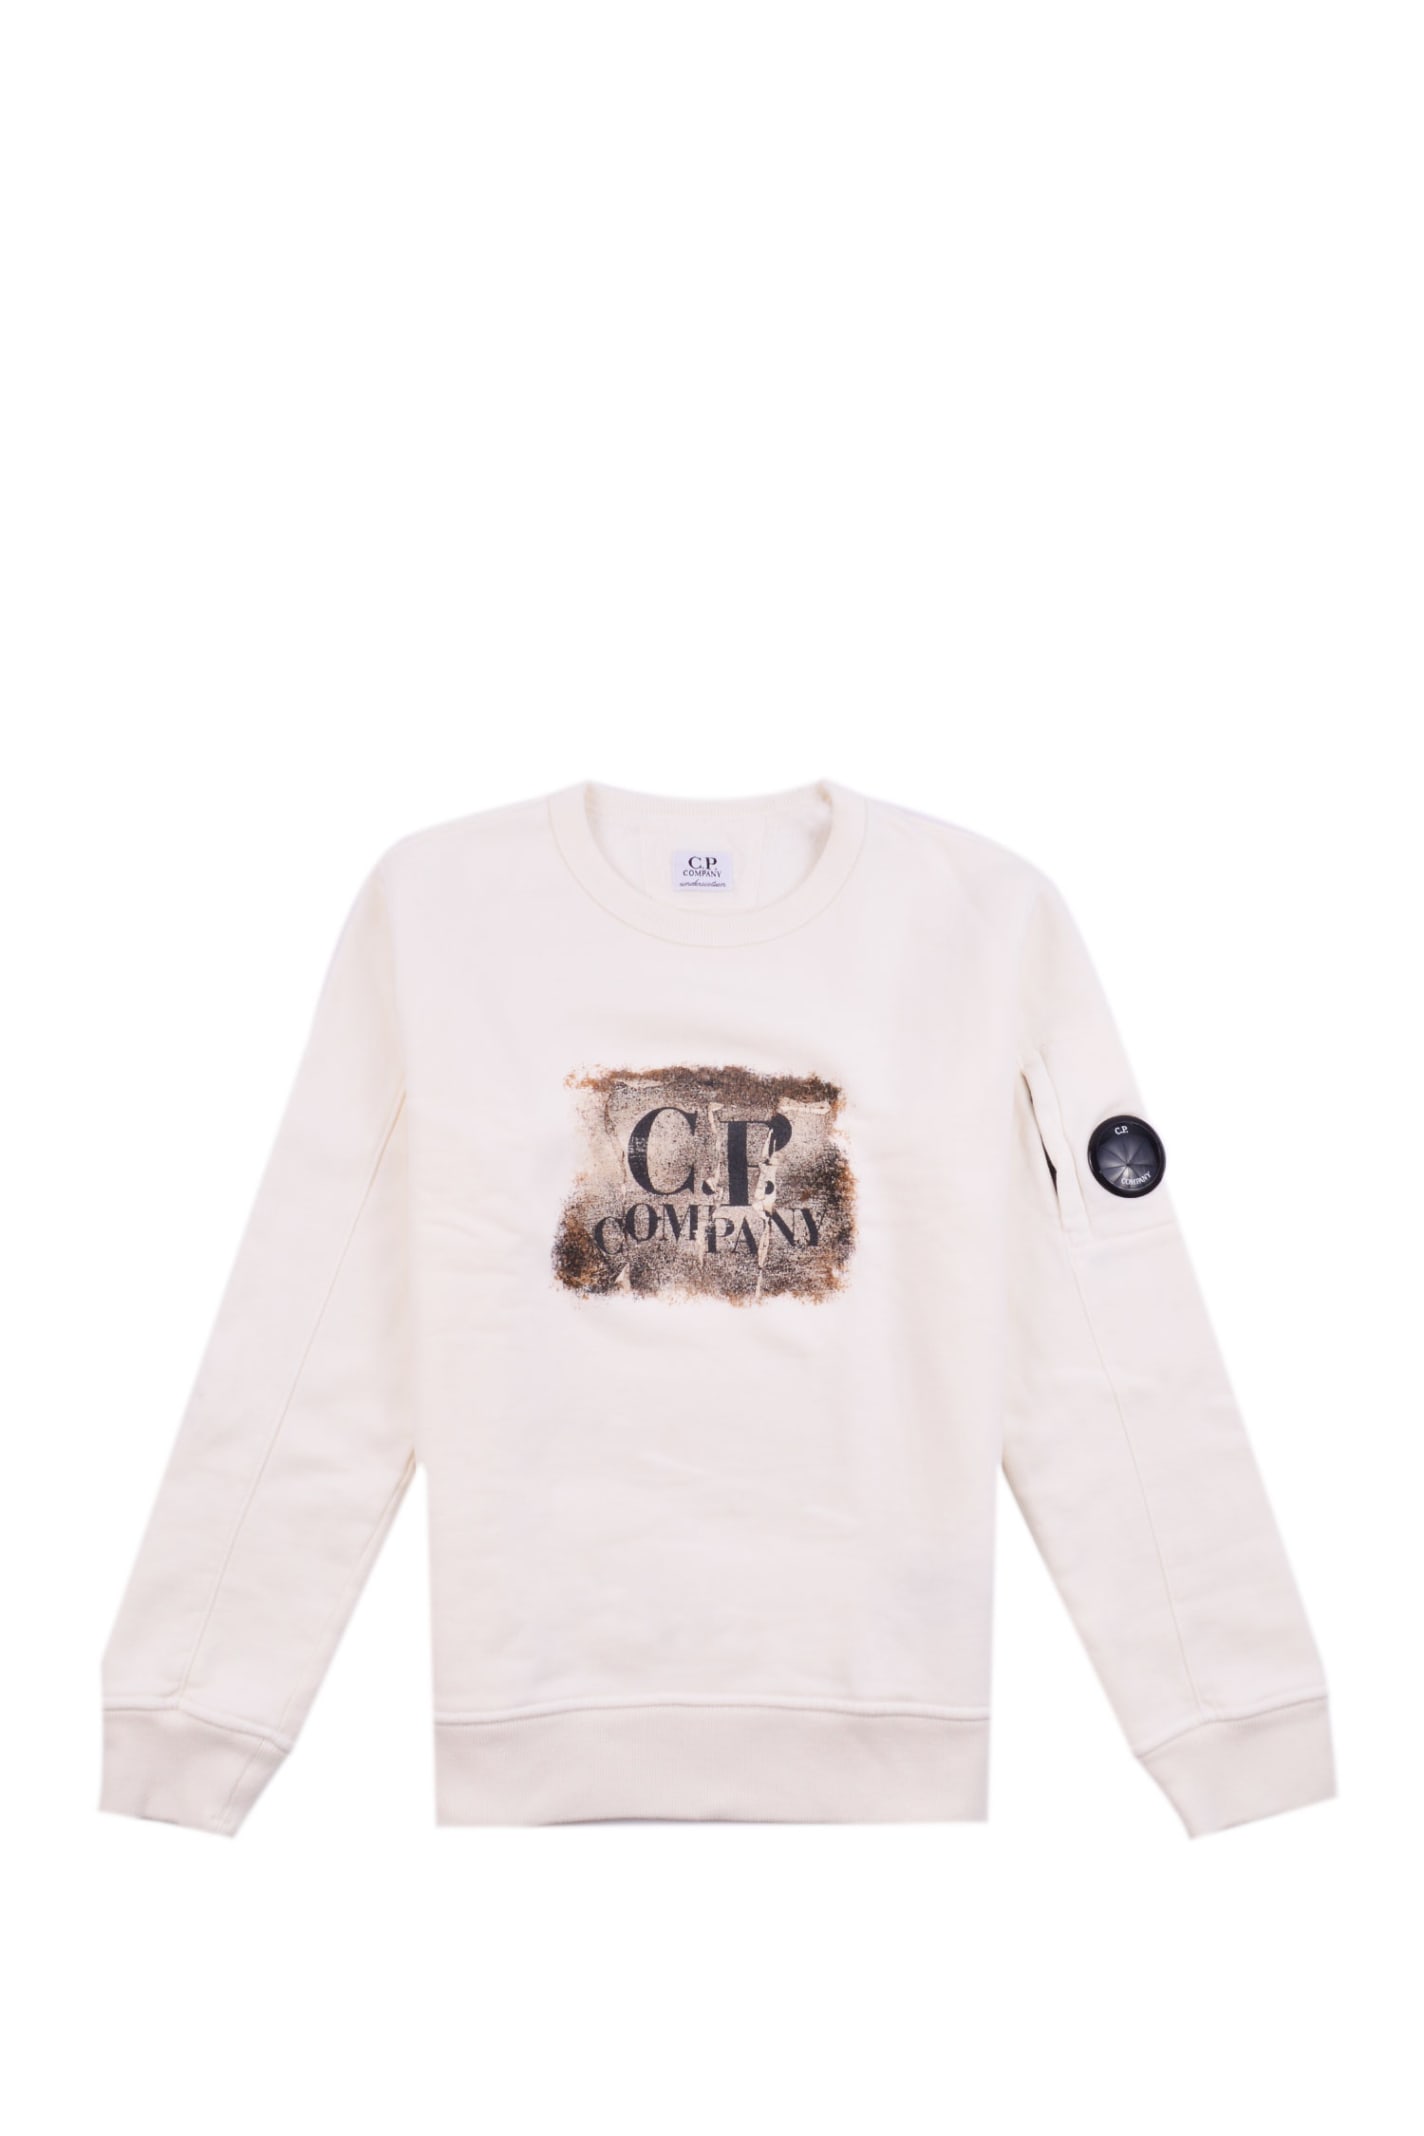 C.P. Company Sweatshirt In Fleece Cotton With Print